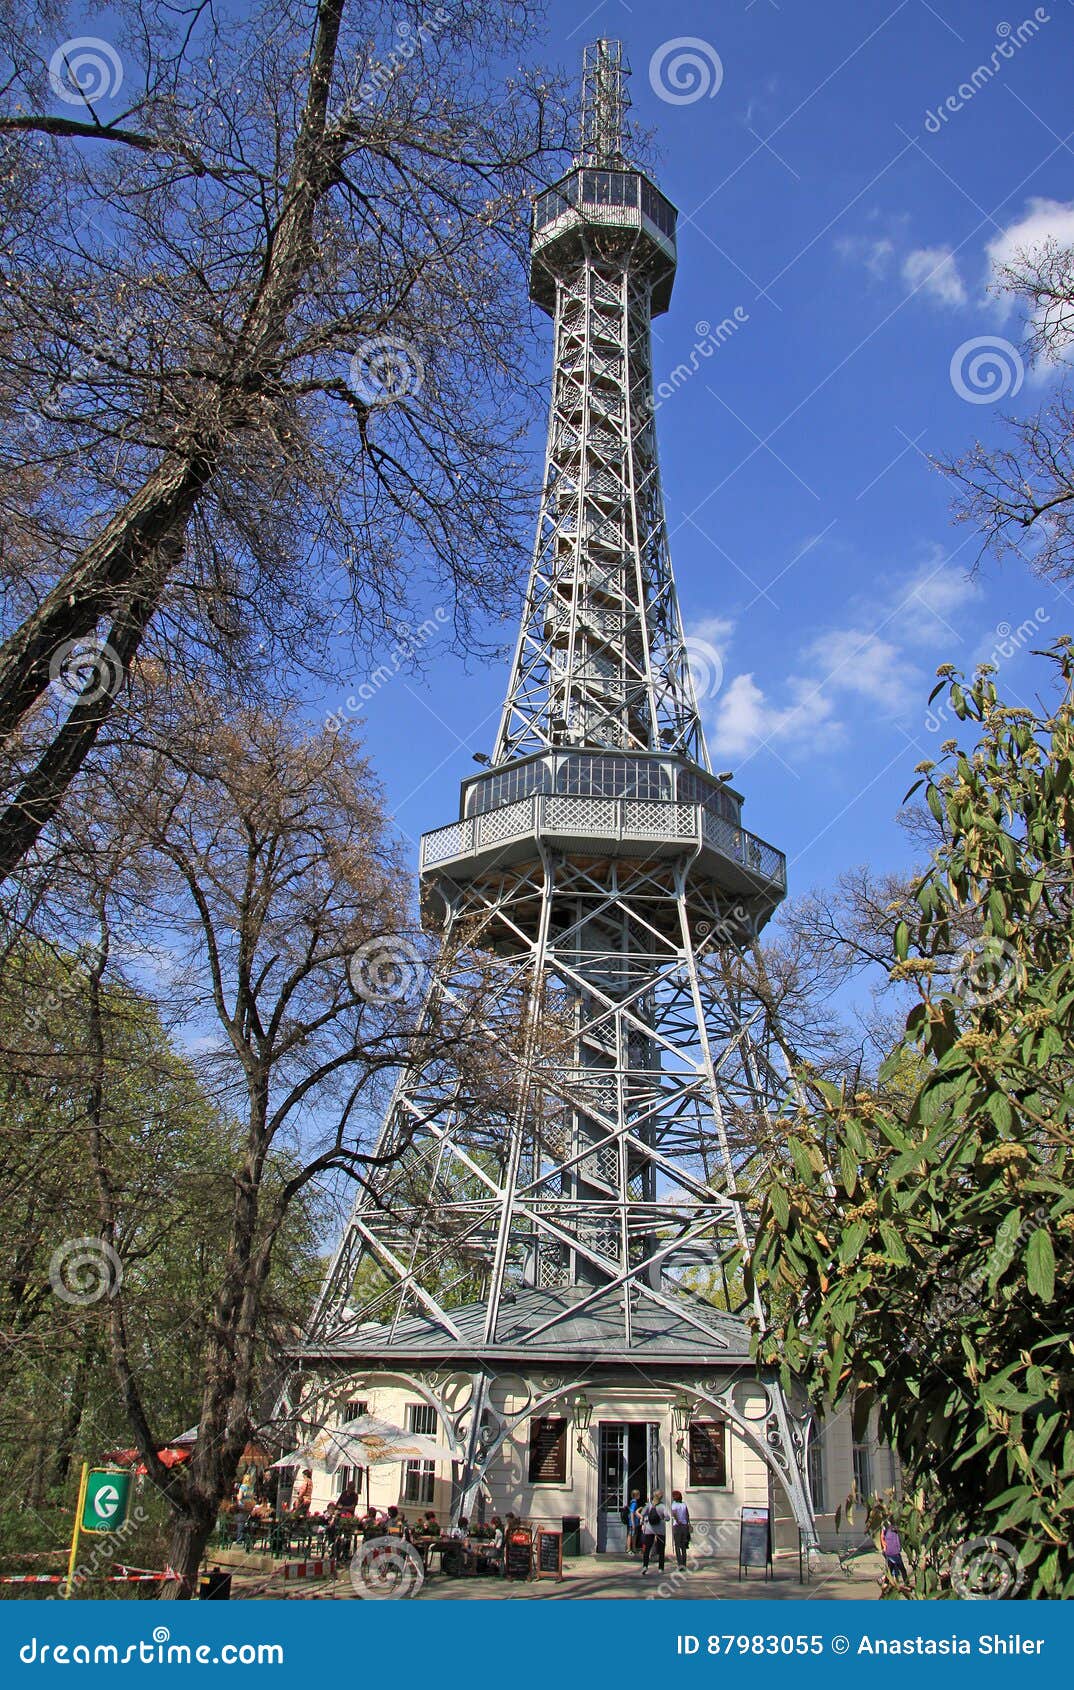 petrin lookout tower petrinska rozhledna in prague, czech republic